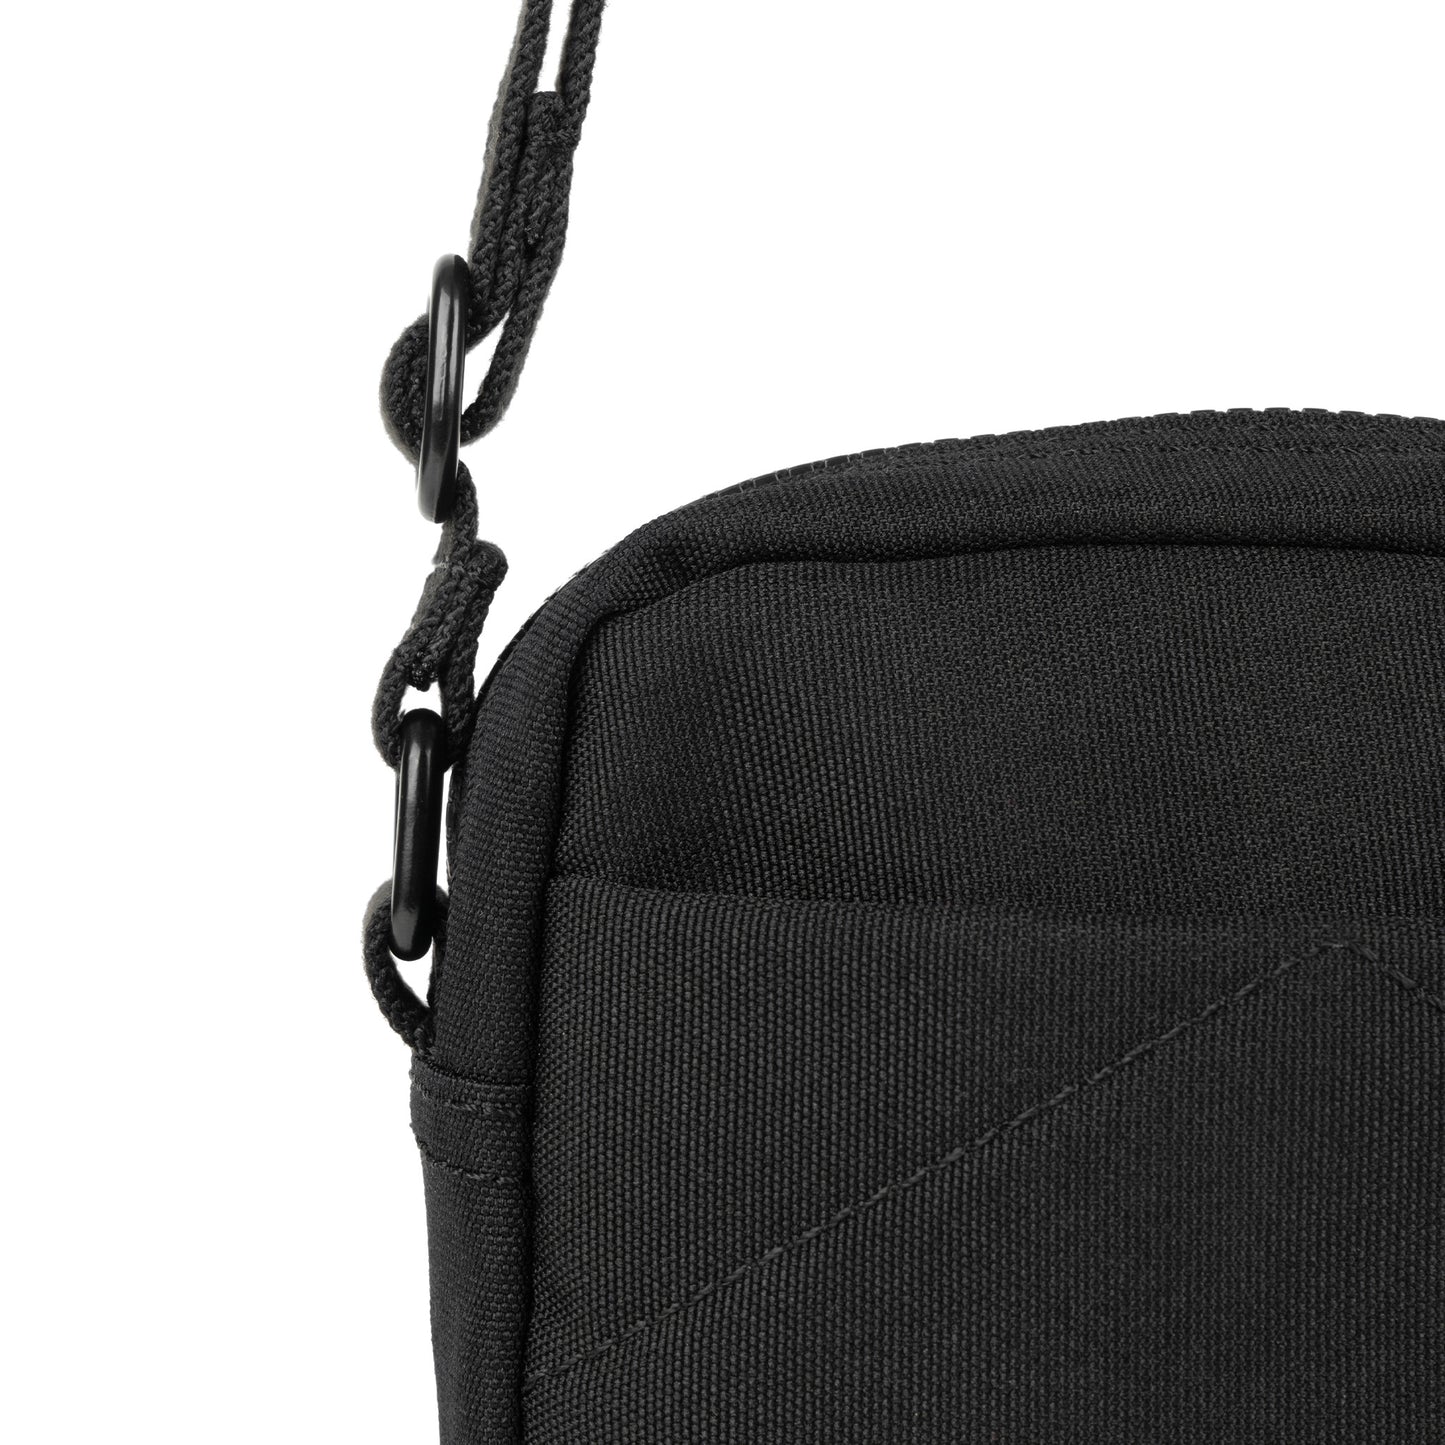 Roka London Bond Crossbody Bag, All Black (Sustainable Canvas)